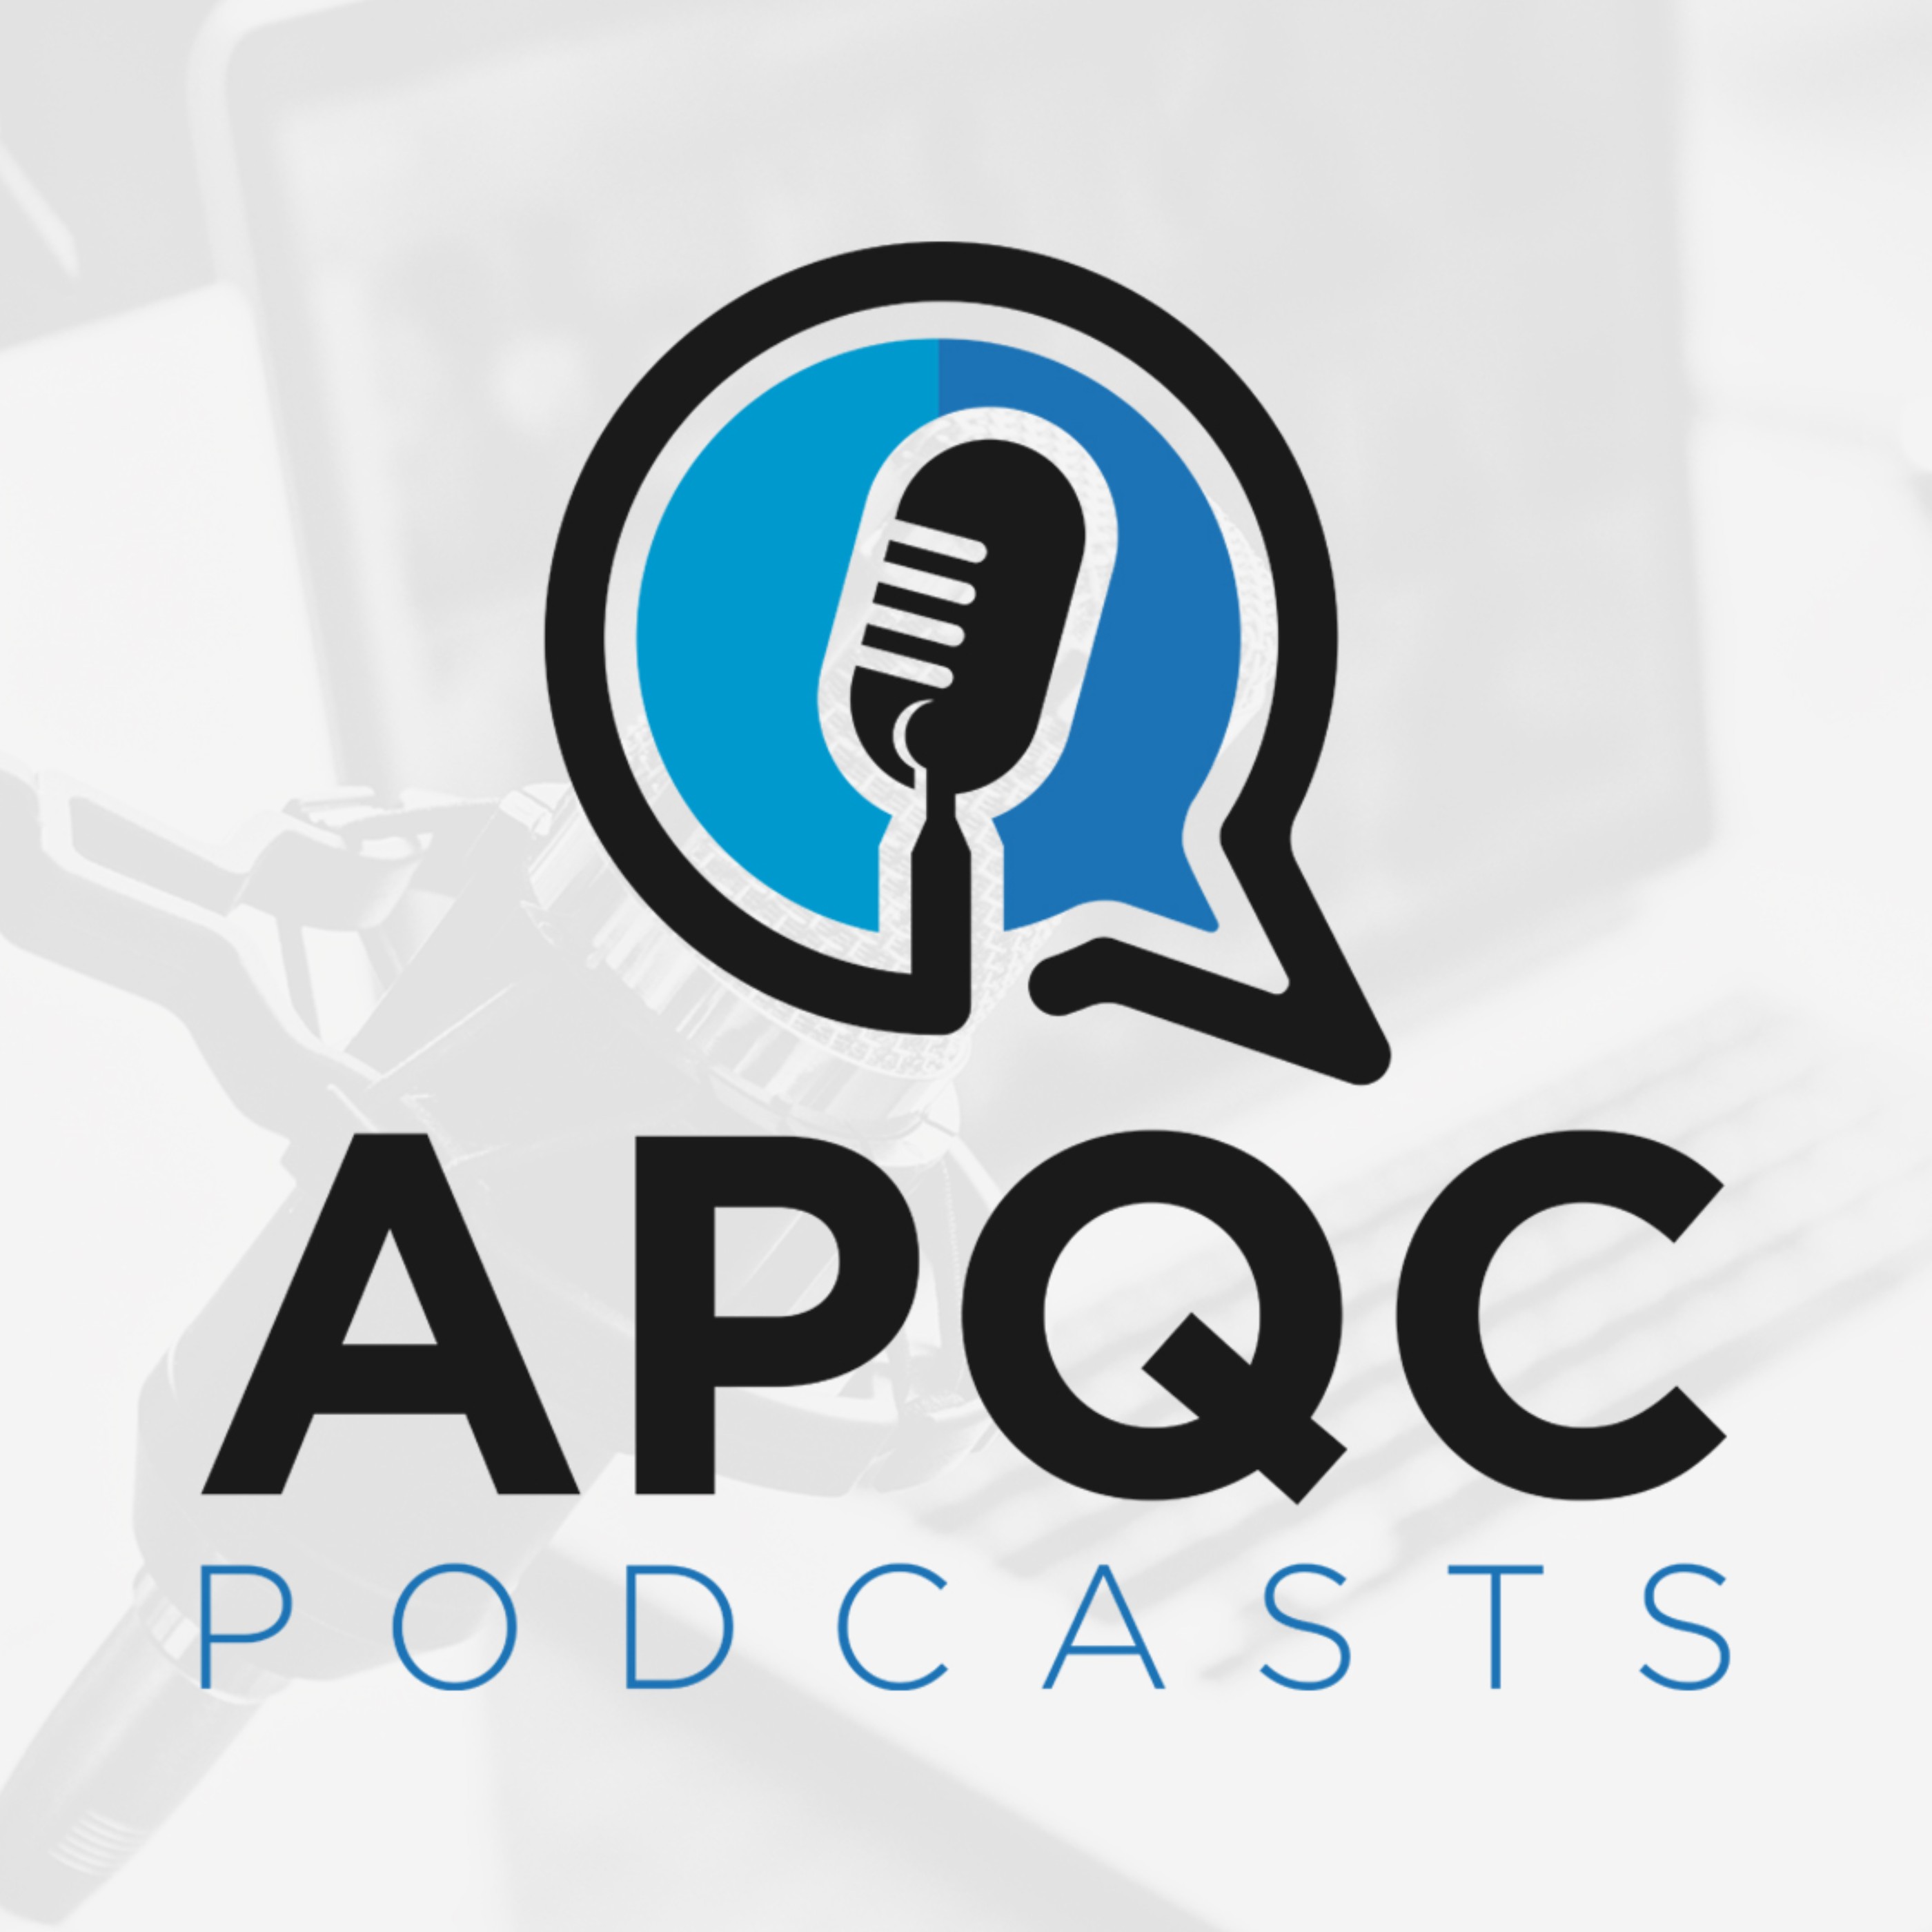 APQC Podcasts logo